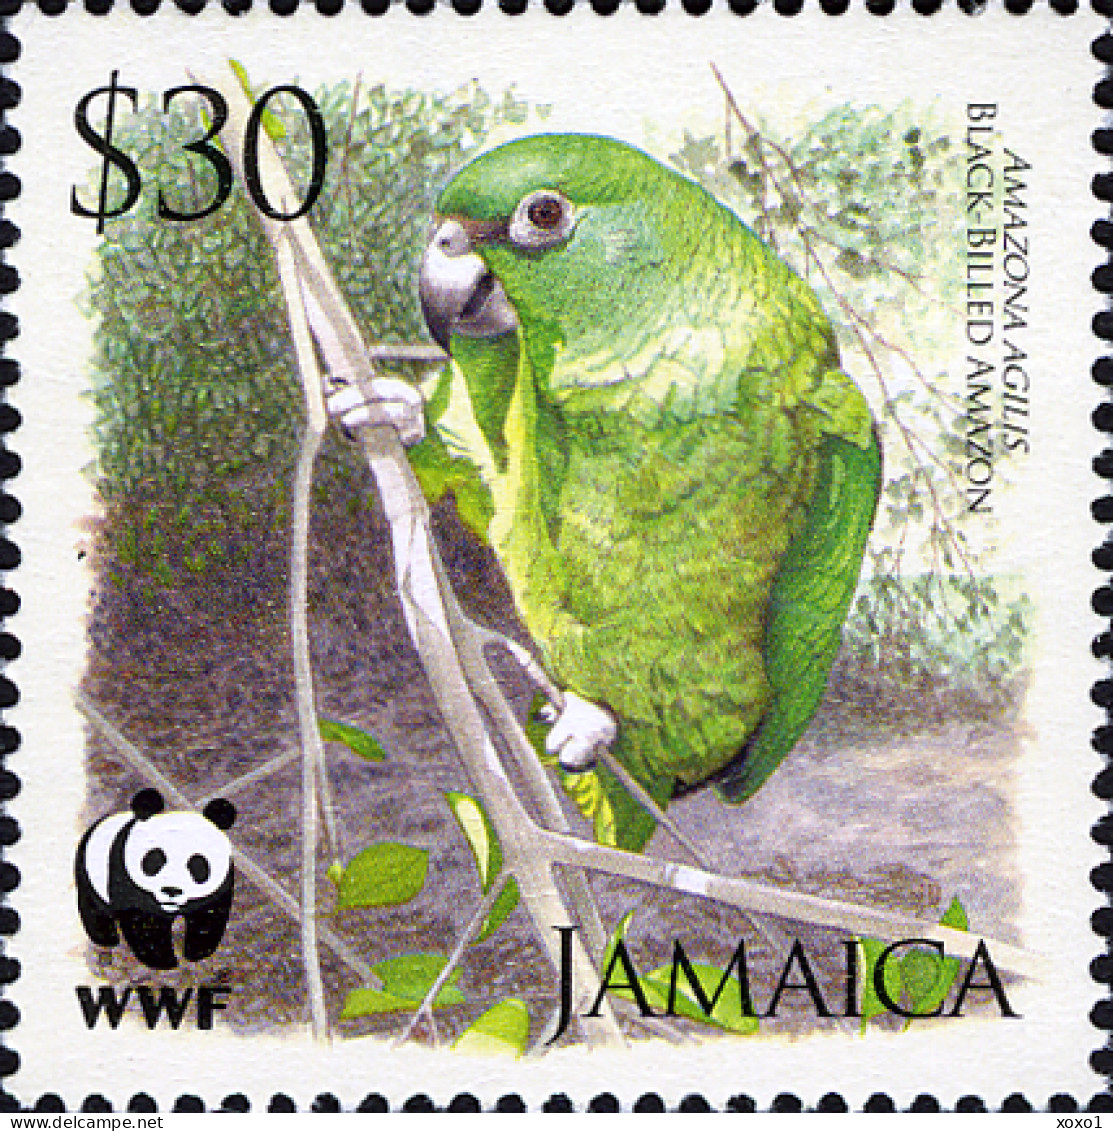 Jamaica 2006 MiNr. 1122 - 1125 Jamaika WWF Birds, Parrots, Black-billed Amazon 4v MNH** 3.20 € - Papagayos